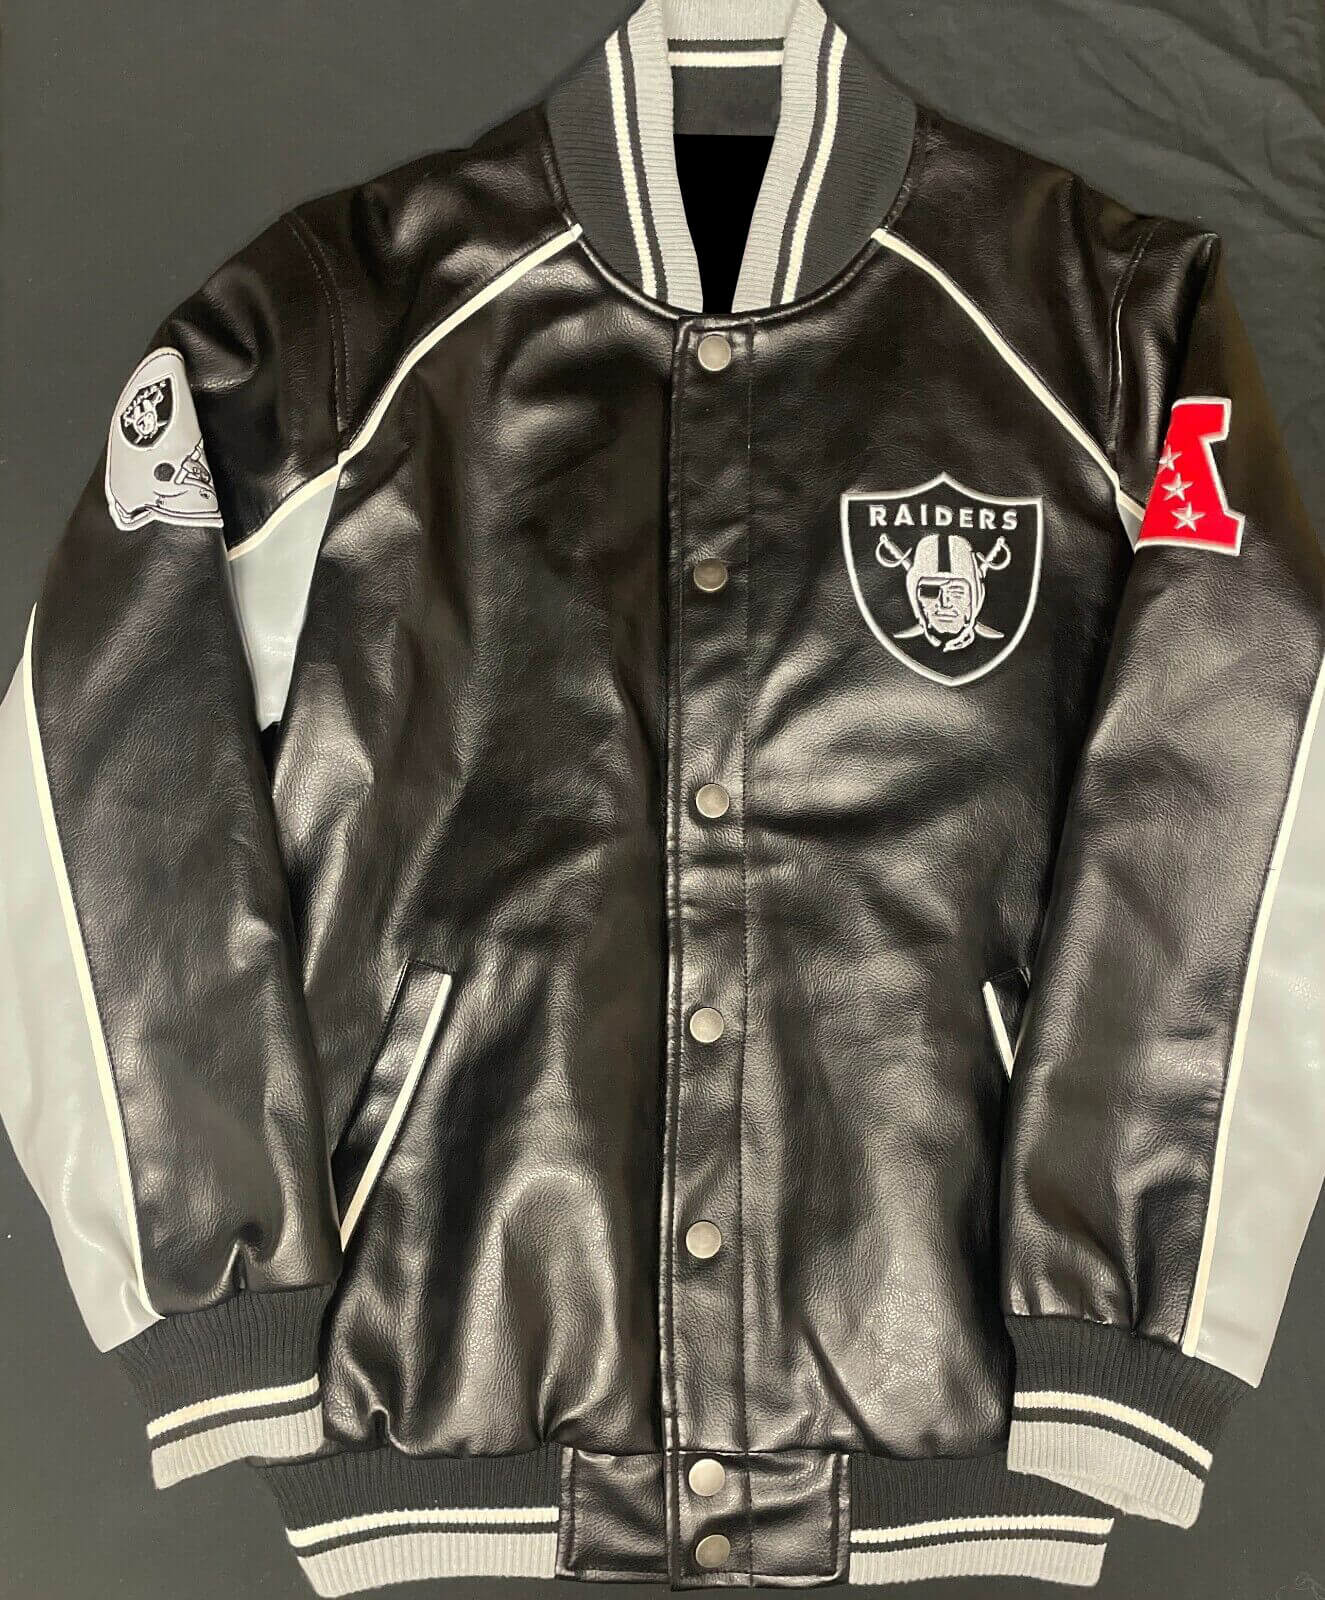 Maker of Jacket Fashion Jackets Vintage Jeff Hamilton Oakland Raiders Leather